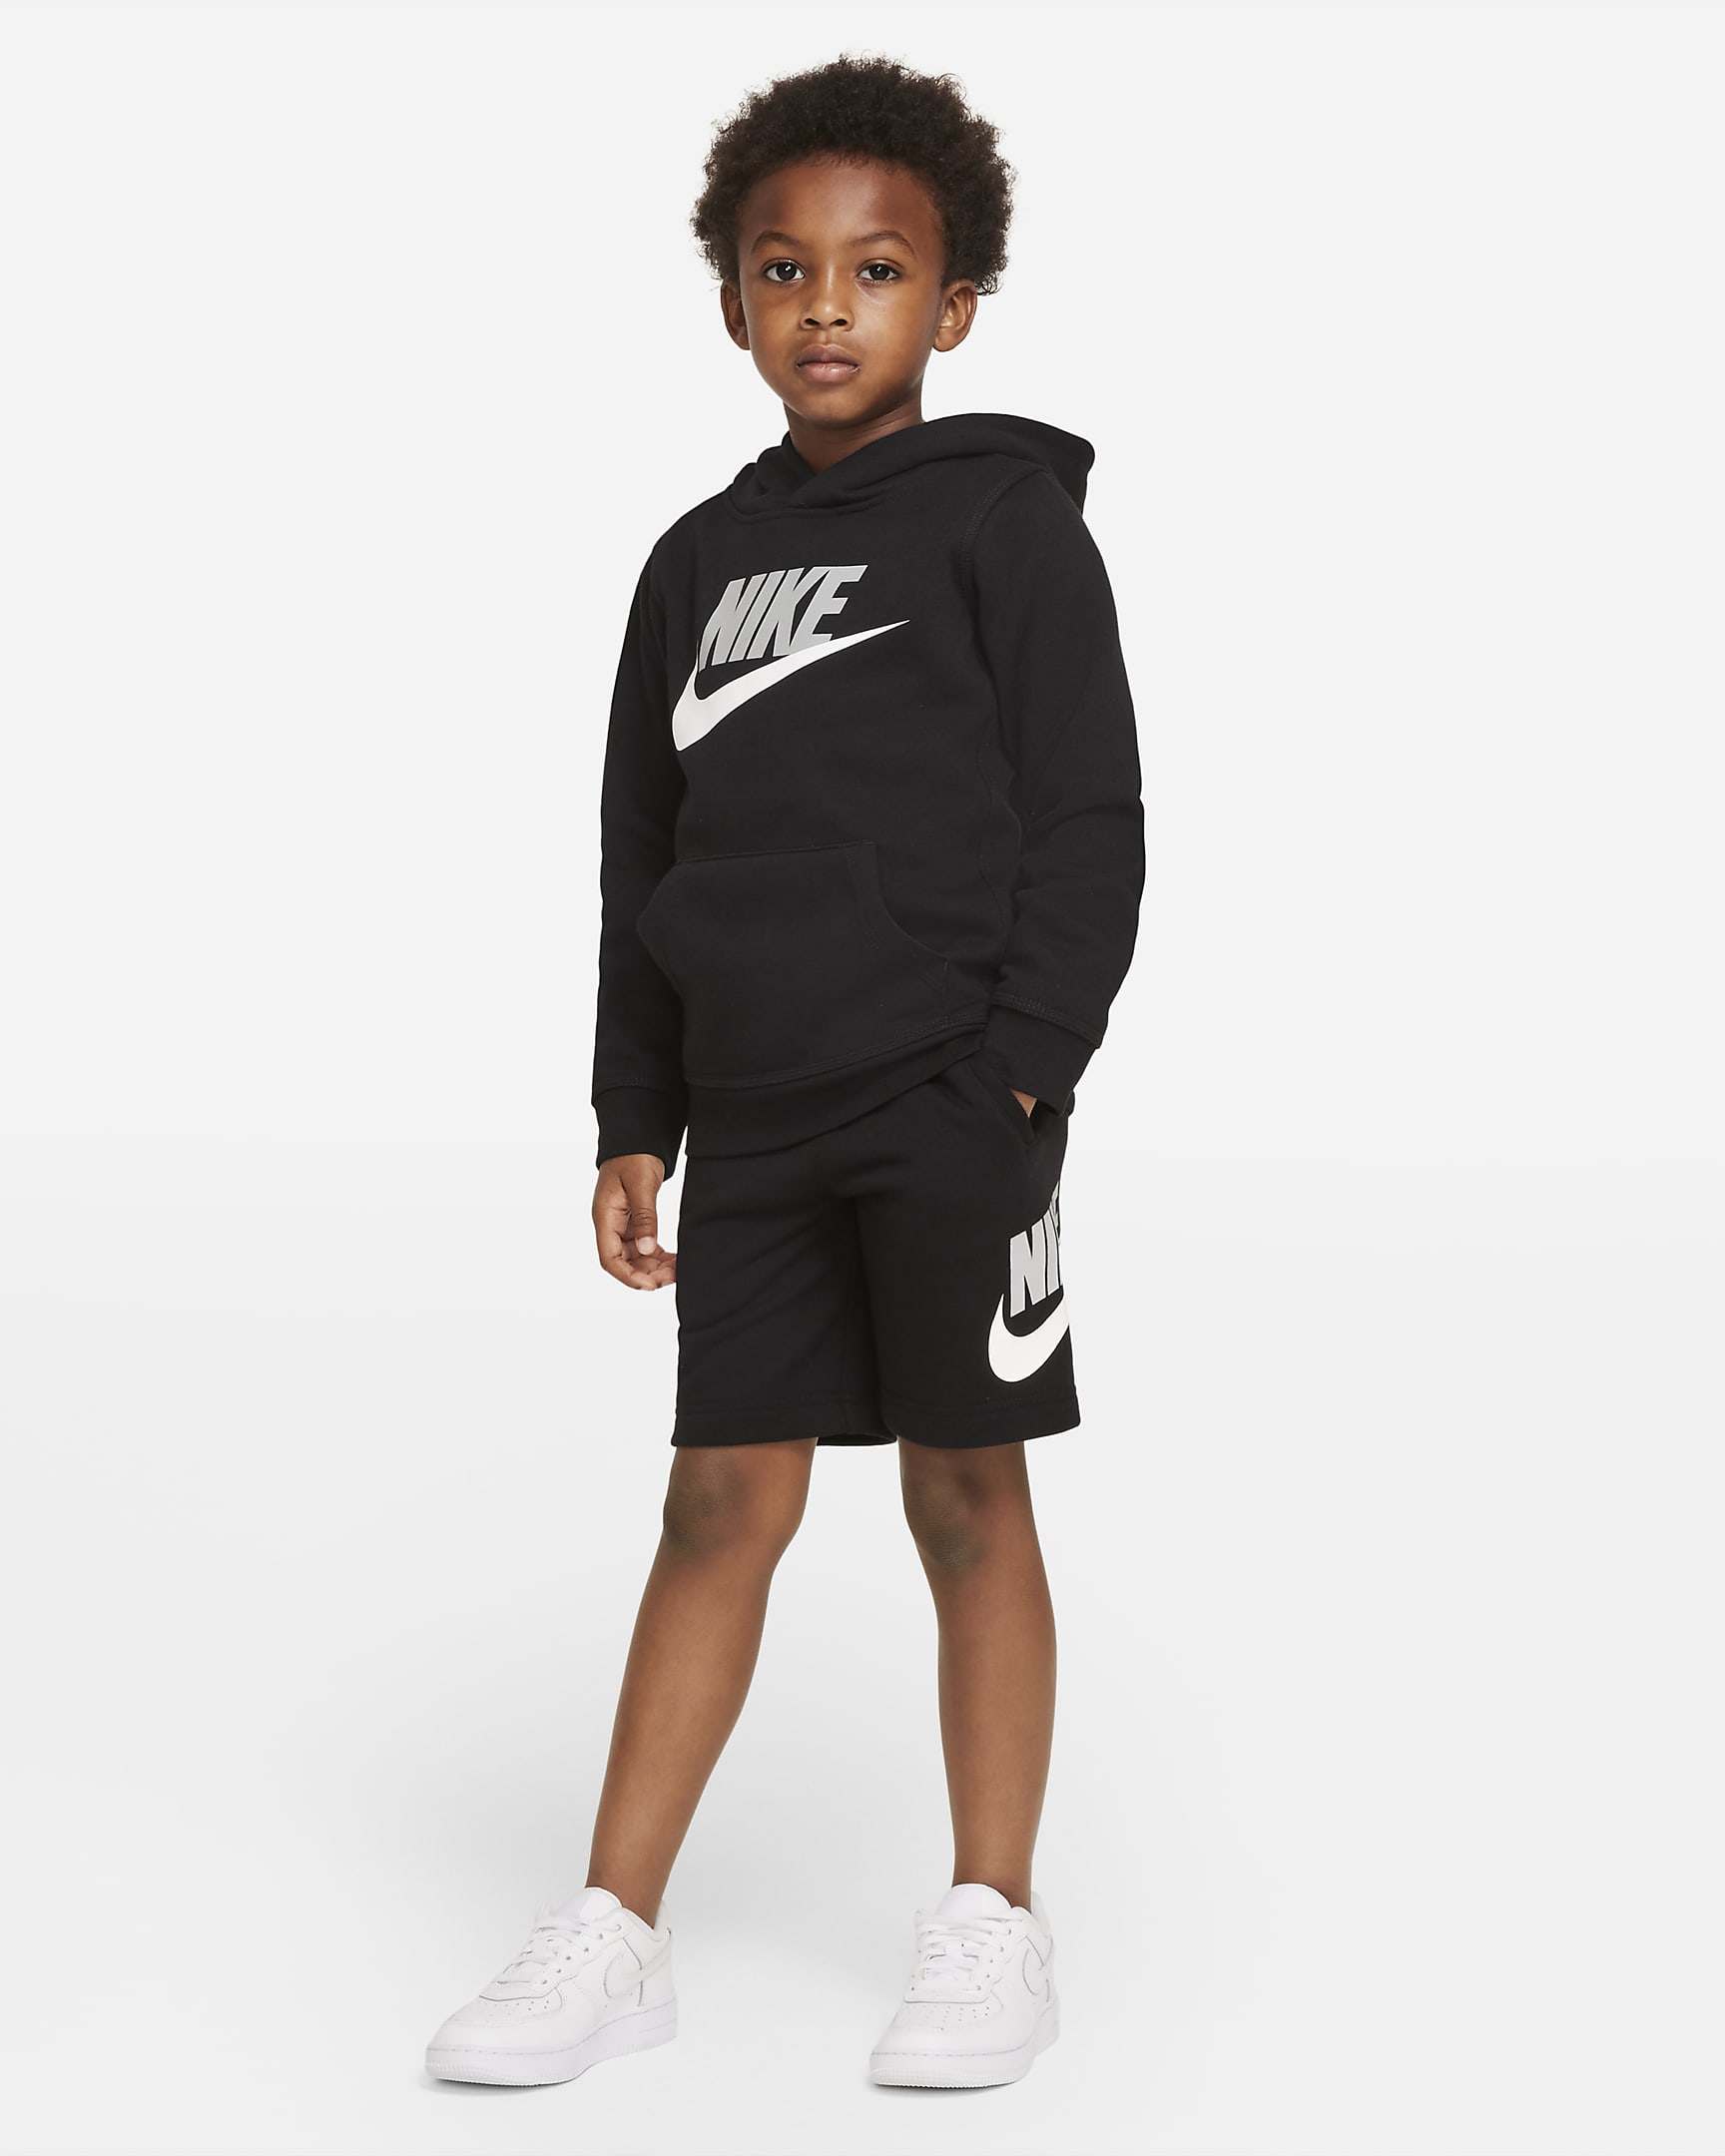 Shorts de French Terry para niños talla pequeña Nike Sportswear Club ...